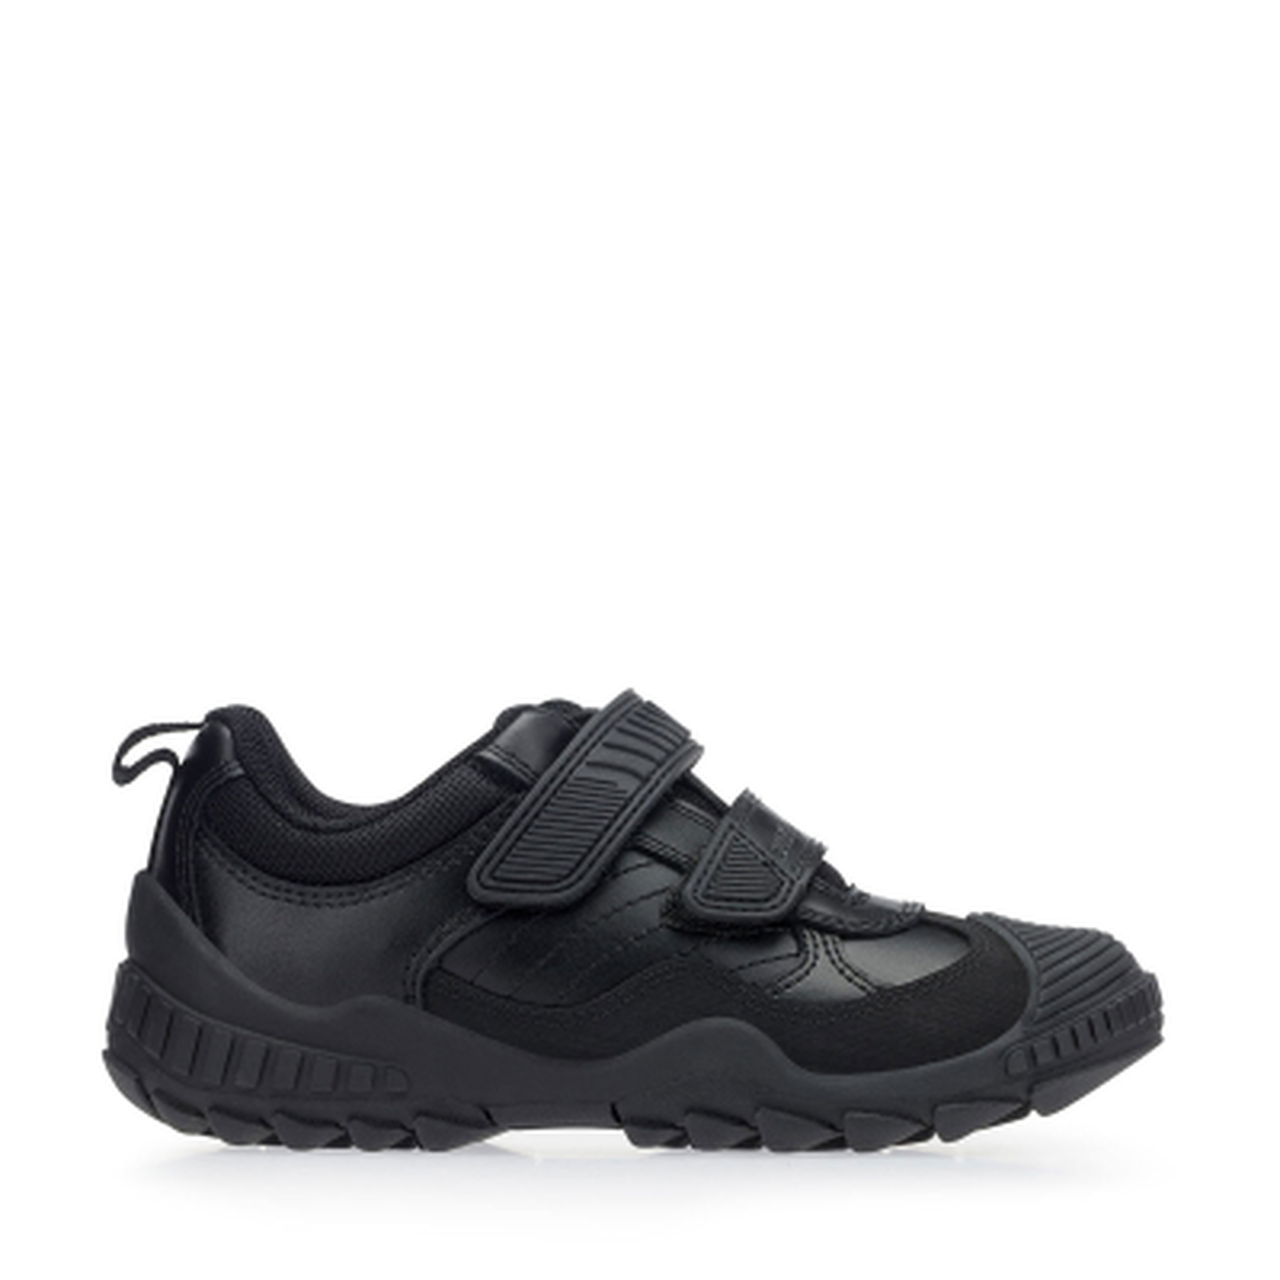 Startrite Boys Extreme Pri School Shoes 2753 F FIT Footwear UK10 KIDS / Black,UK11 KIDS / Black,UK11.5 KIDS / Black,UK12 KIDS / Black,UK12.5 KIDS / Black,UK13 KIDS / Black,UK13.5 KIDS / Black,UK1 KIDS / Black,UK1.5 KIDS / Black,UK2 KIDS / Black,UK2.5 KIDS / Black,UK3 KIDS / Black,UK3.5 KIDS / Black,UK4 ADULT / Black,UK10.5 KIDS / Black